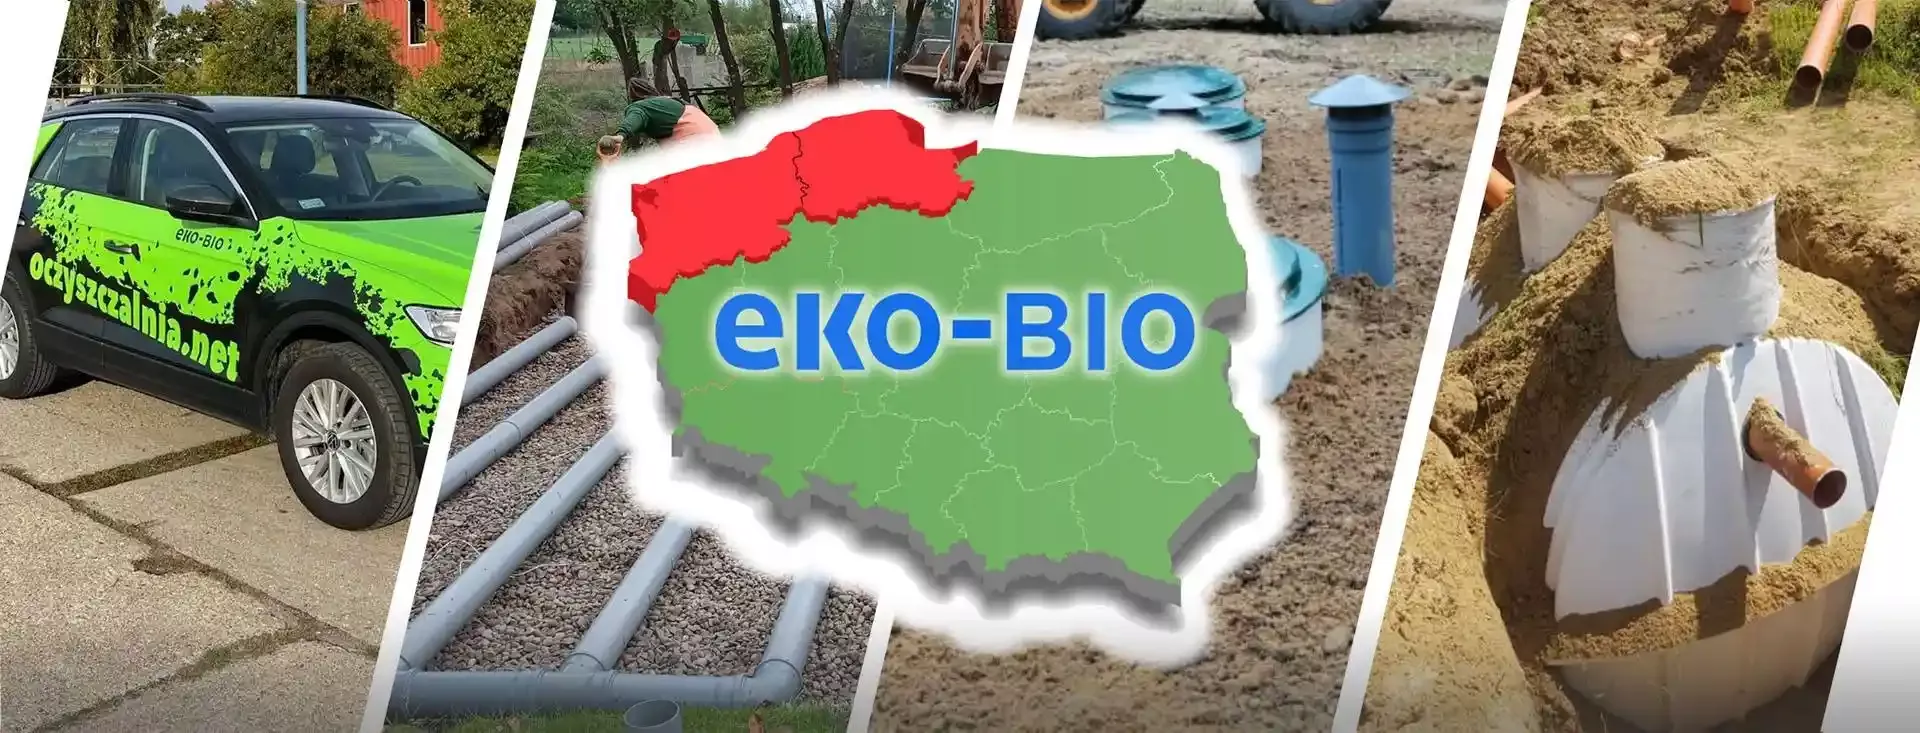 Mapa Polski z napisem eko-bio